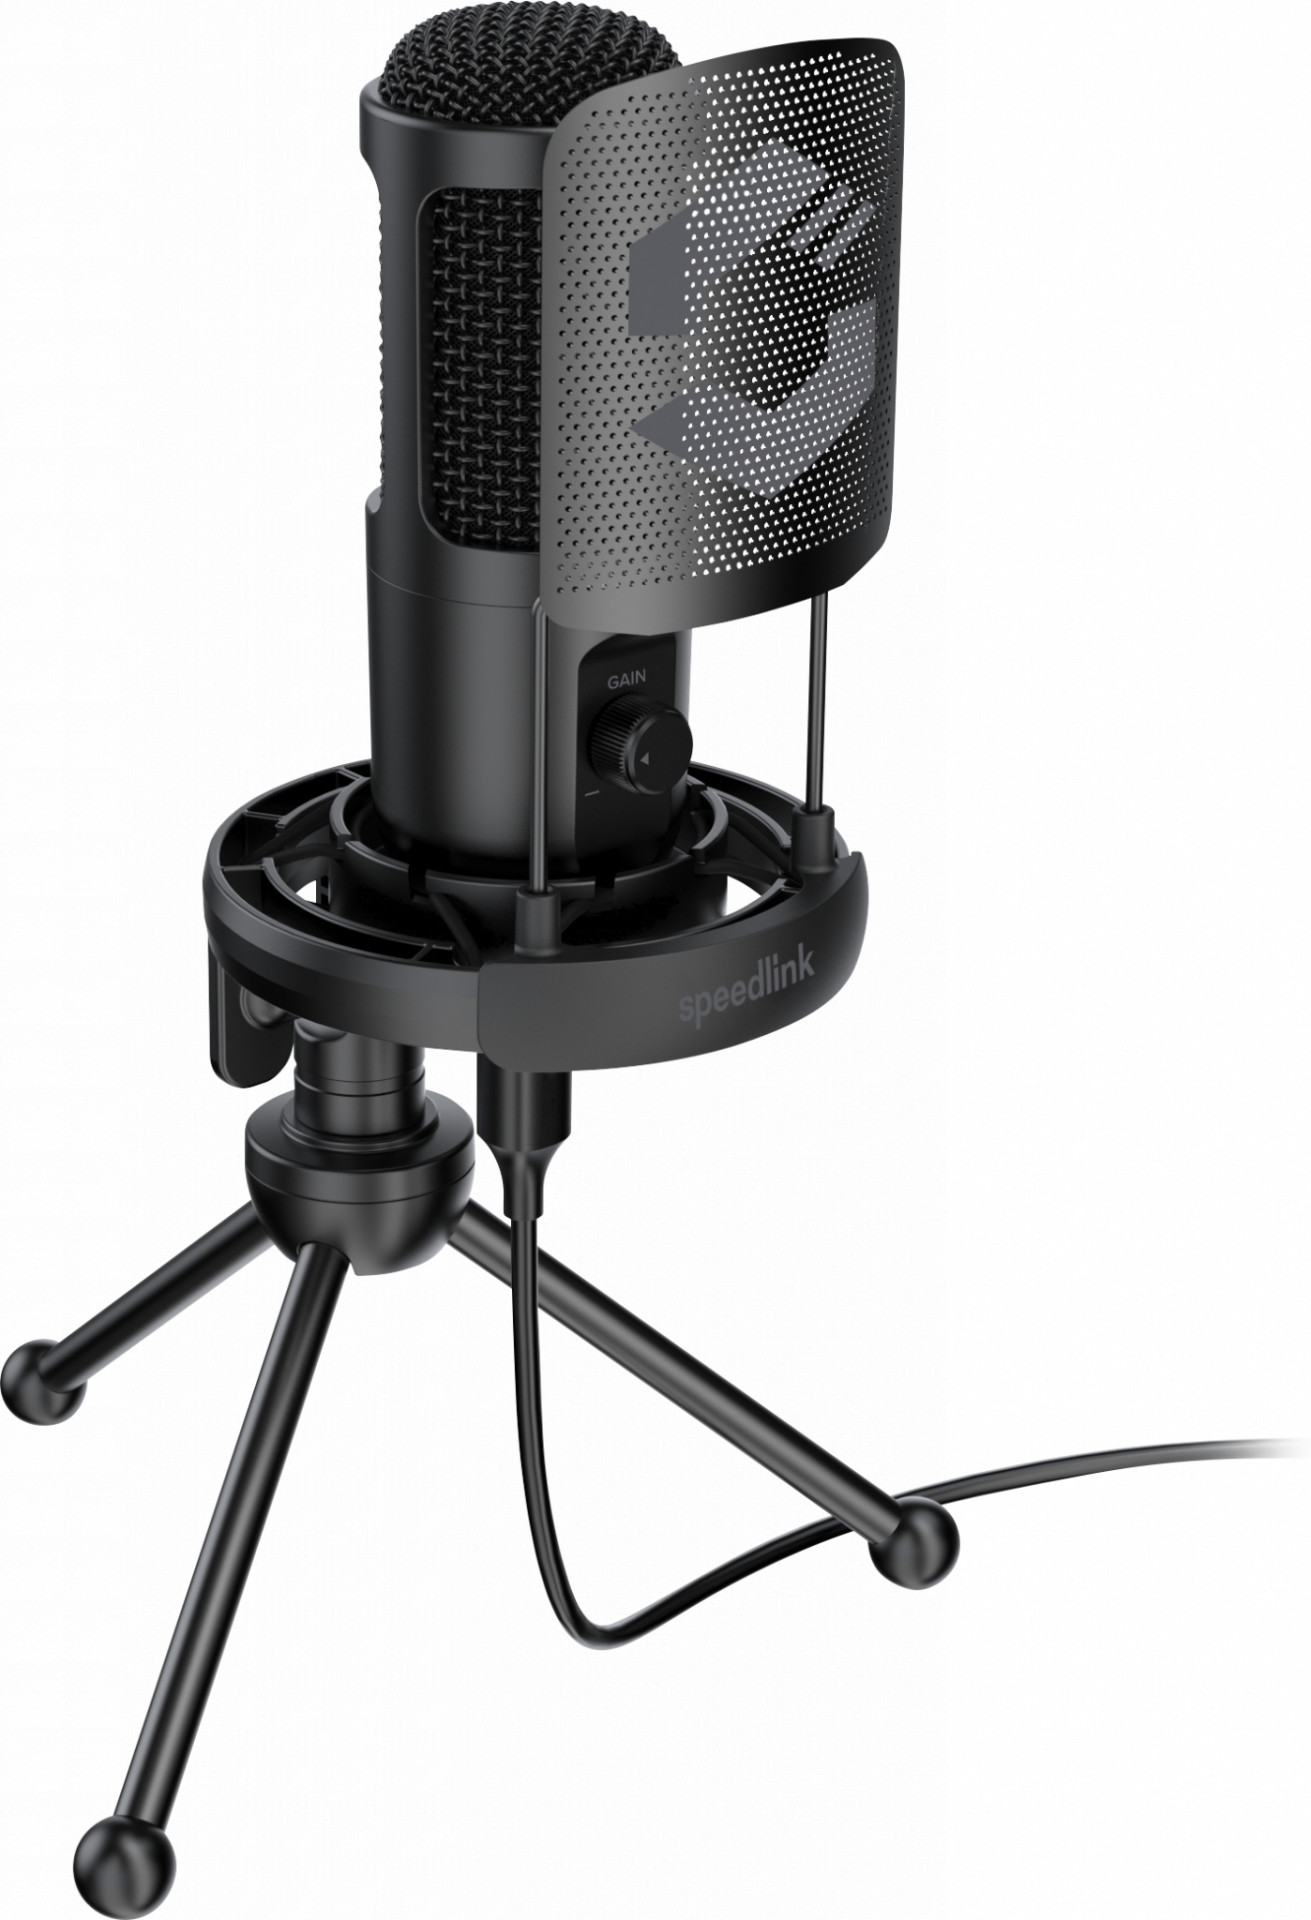 Speedlink AUDIS PRO Streaming Microphone